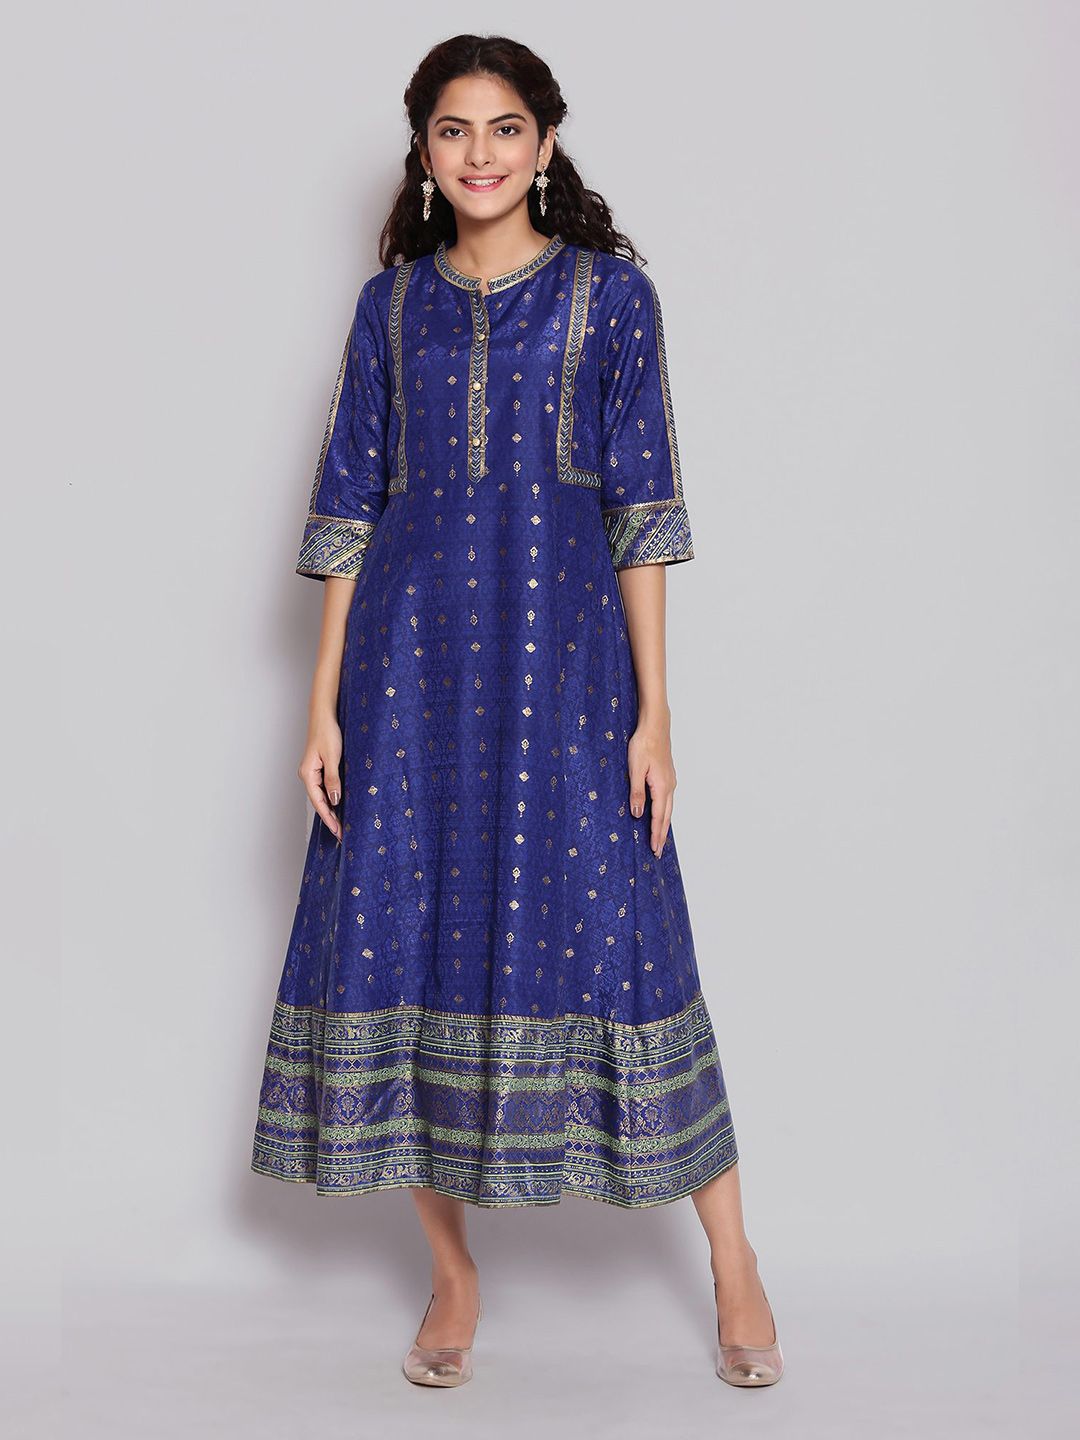 AURELIA Blue & Gold-Toned Ethnic Motifs Ethnic A-Line Midi Dress Price in India